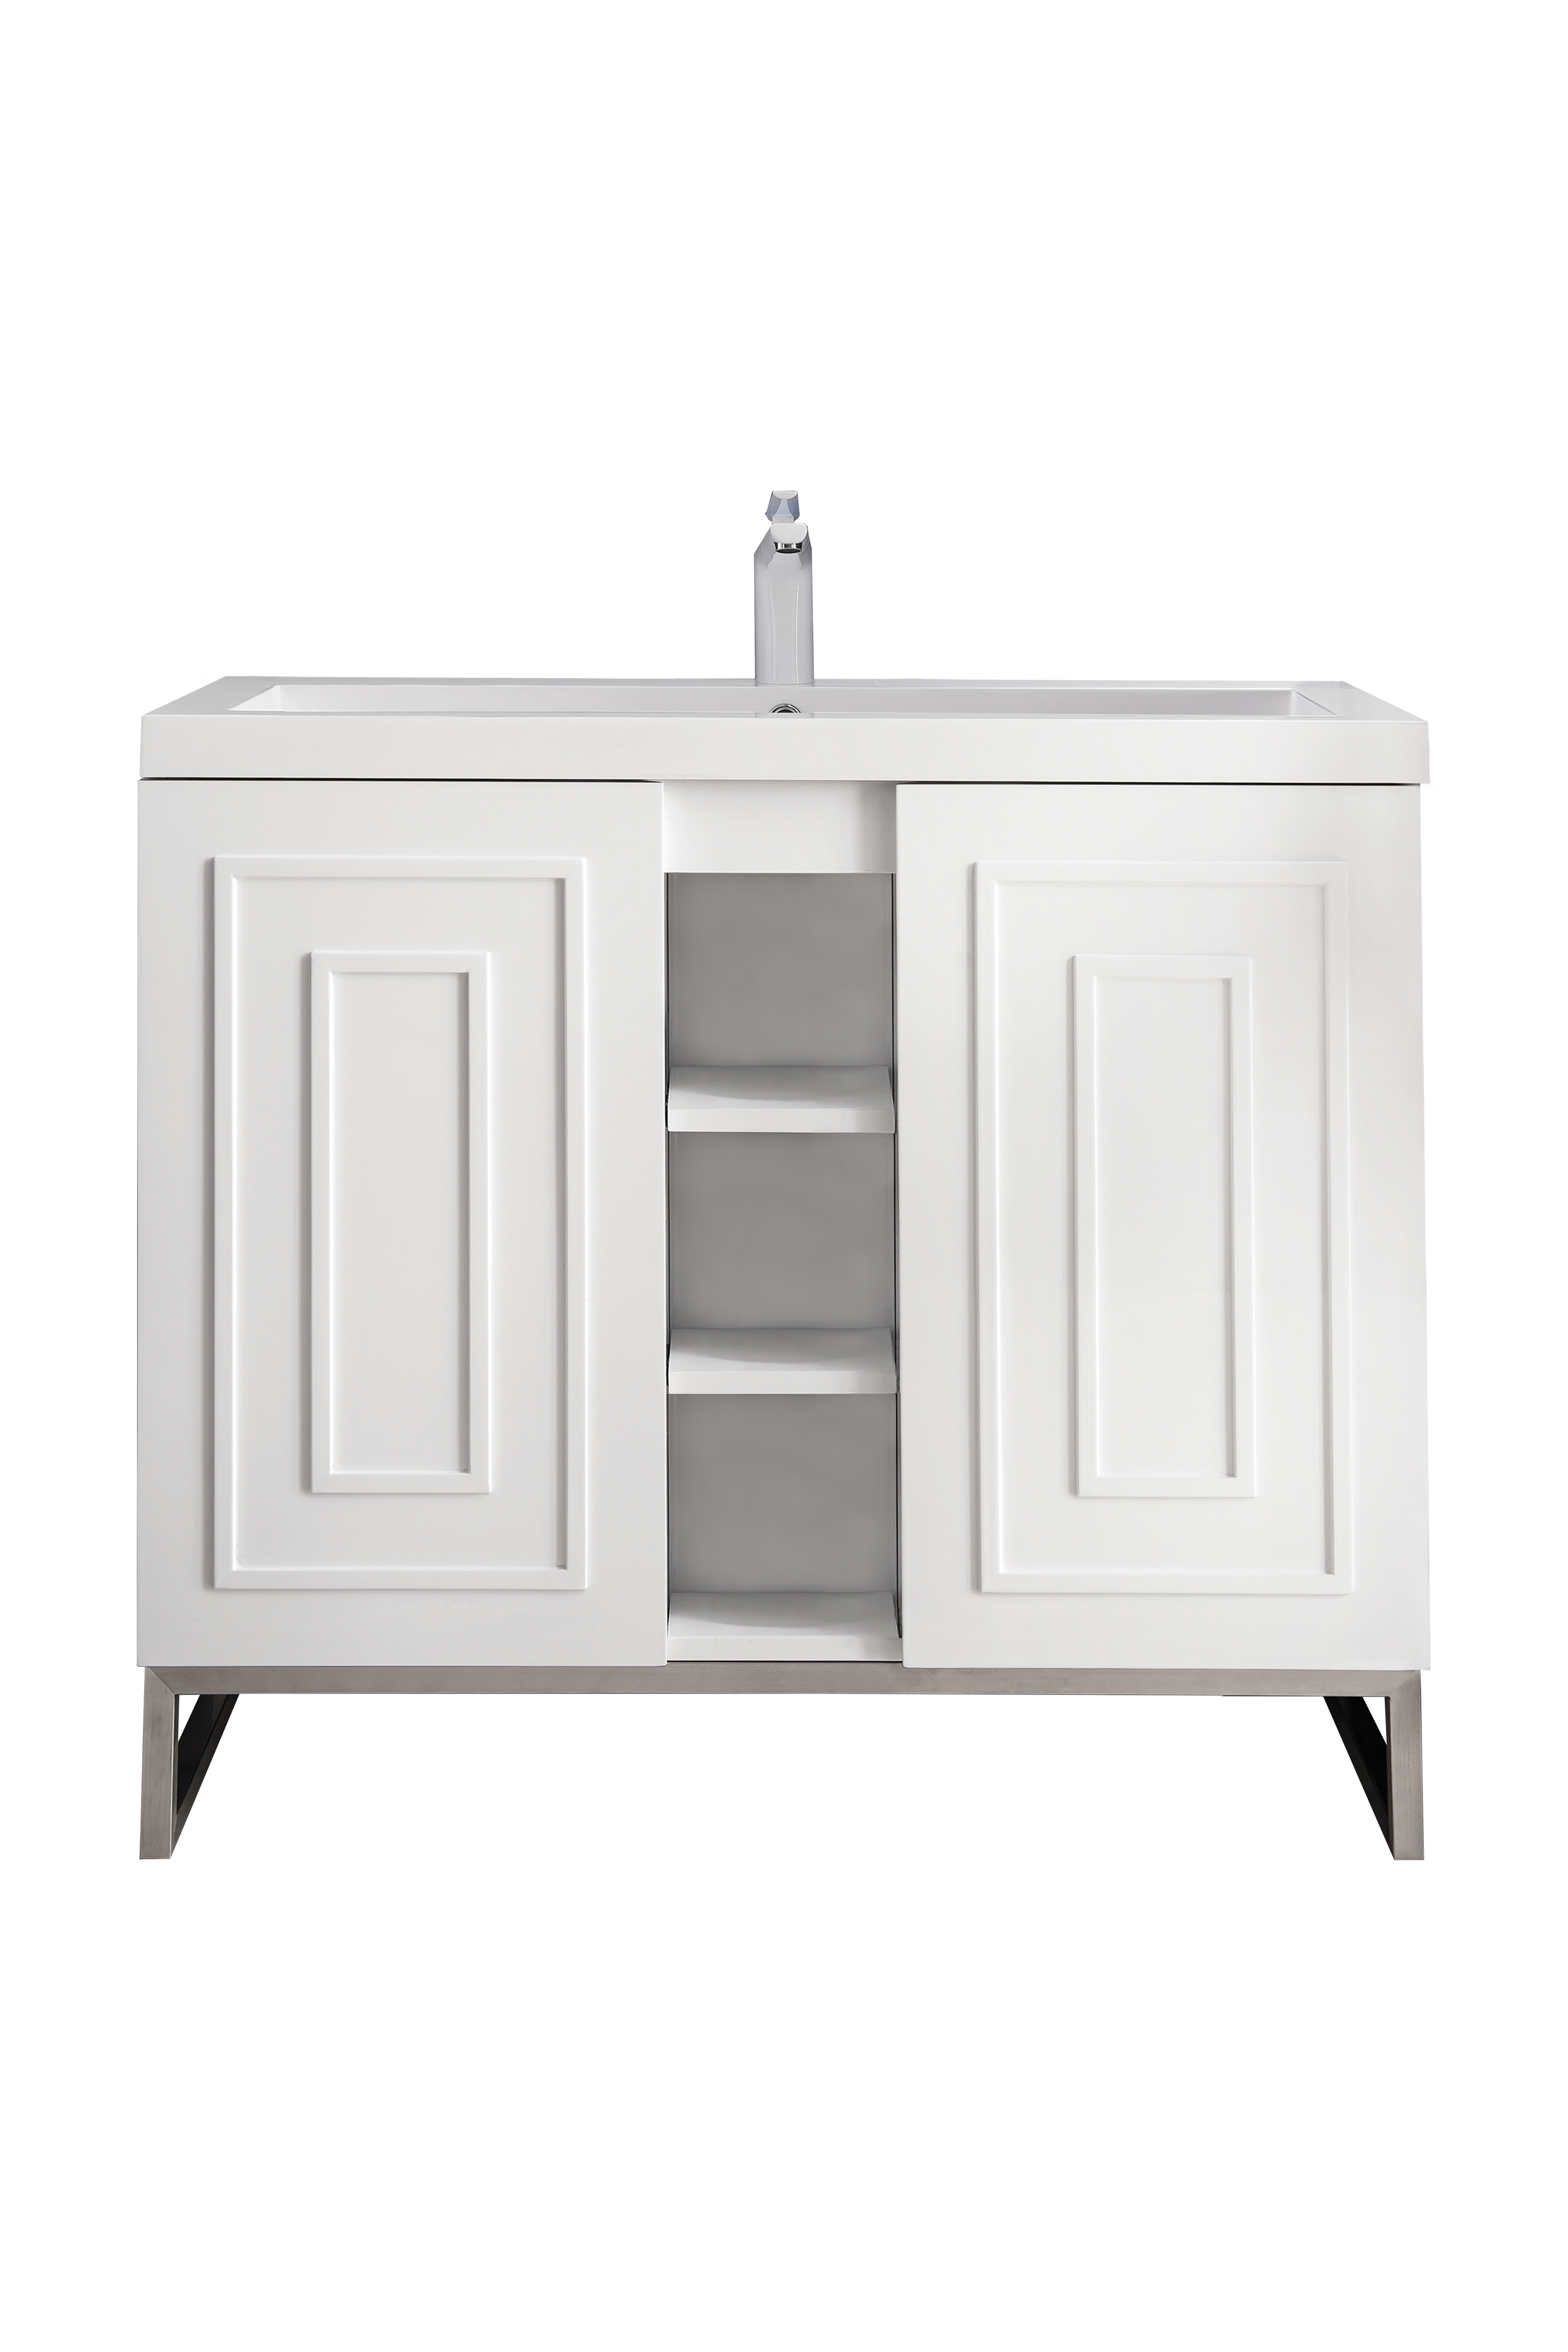 James Martin E110V39.5GWBNKWG Alicante' 39.5" Single Vanity Cabinet, Glossy White, Brushed Nickel w/White Glossy Composite Countertop